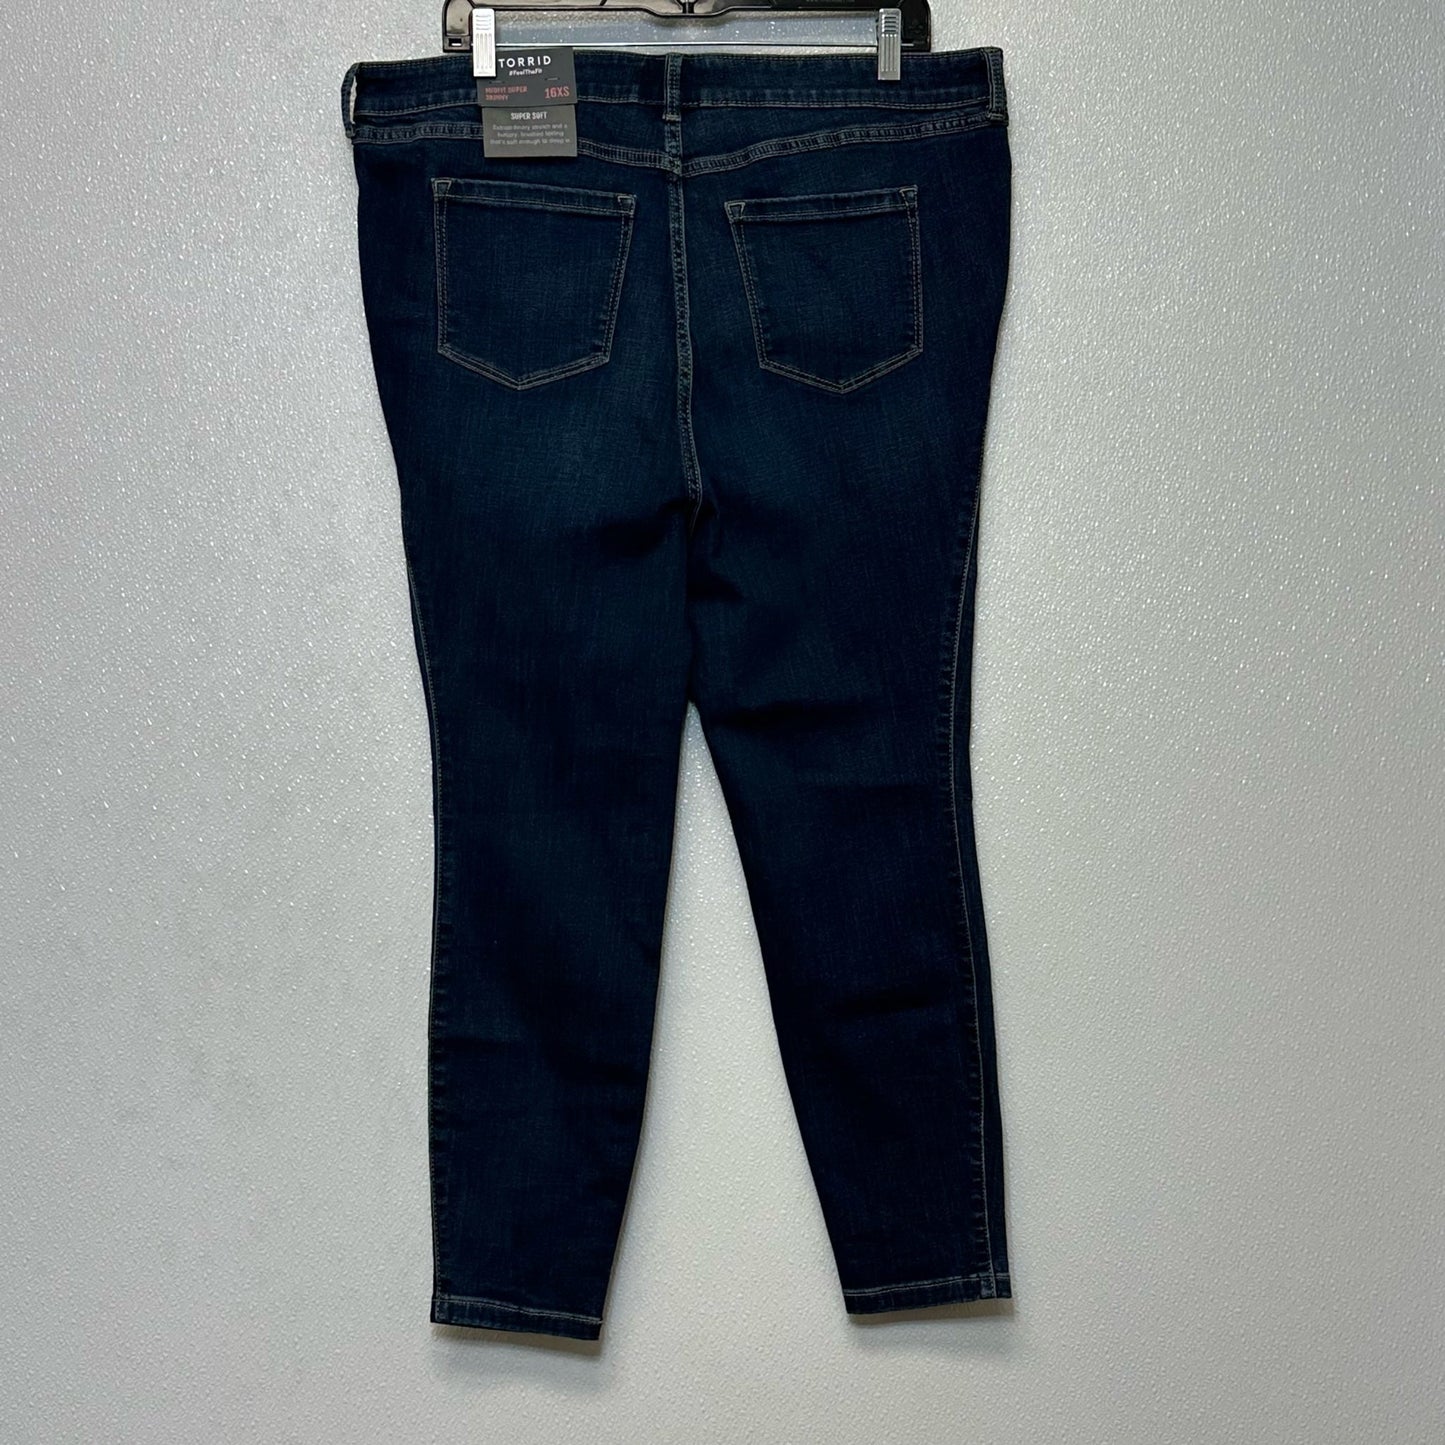 Jeans Skinny By Torrid  Size: 16XS